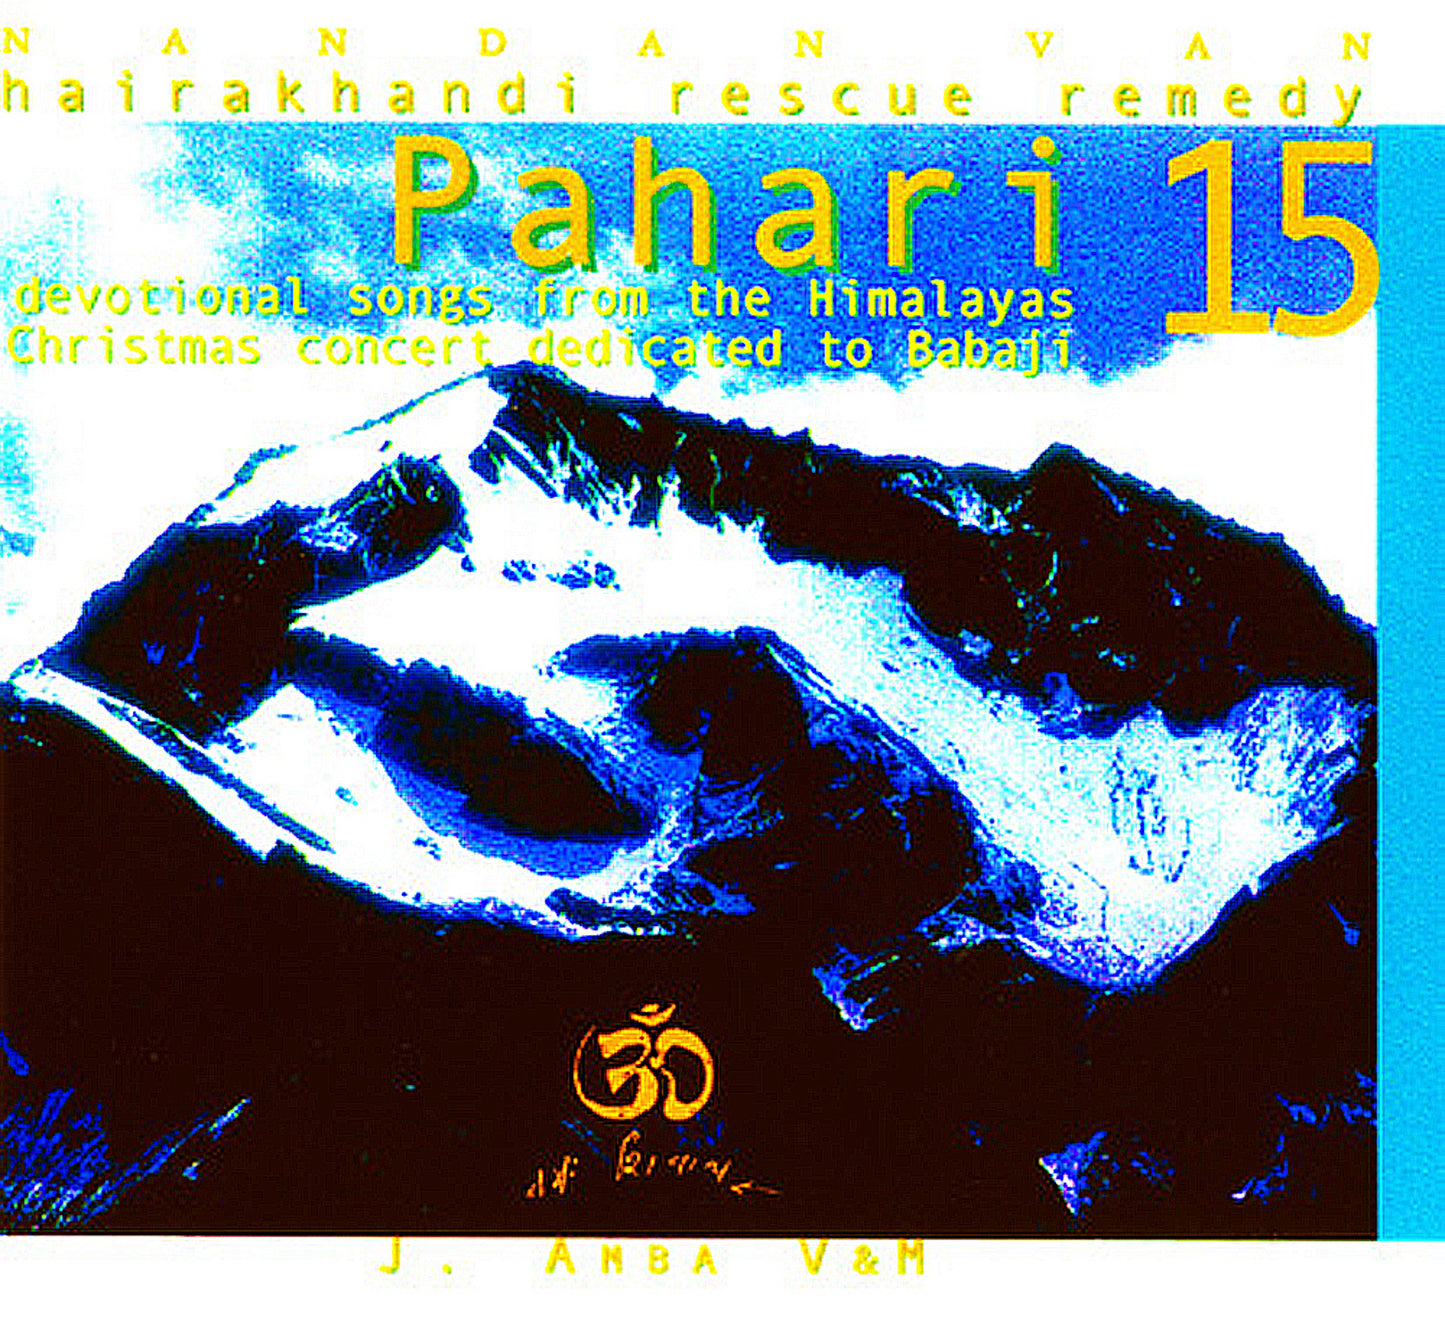 Pahari, Devotional Songs from the Himalayas - Sanatan Dharma Spirituality Music Therapy for Meditation